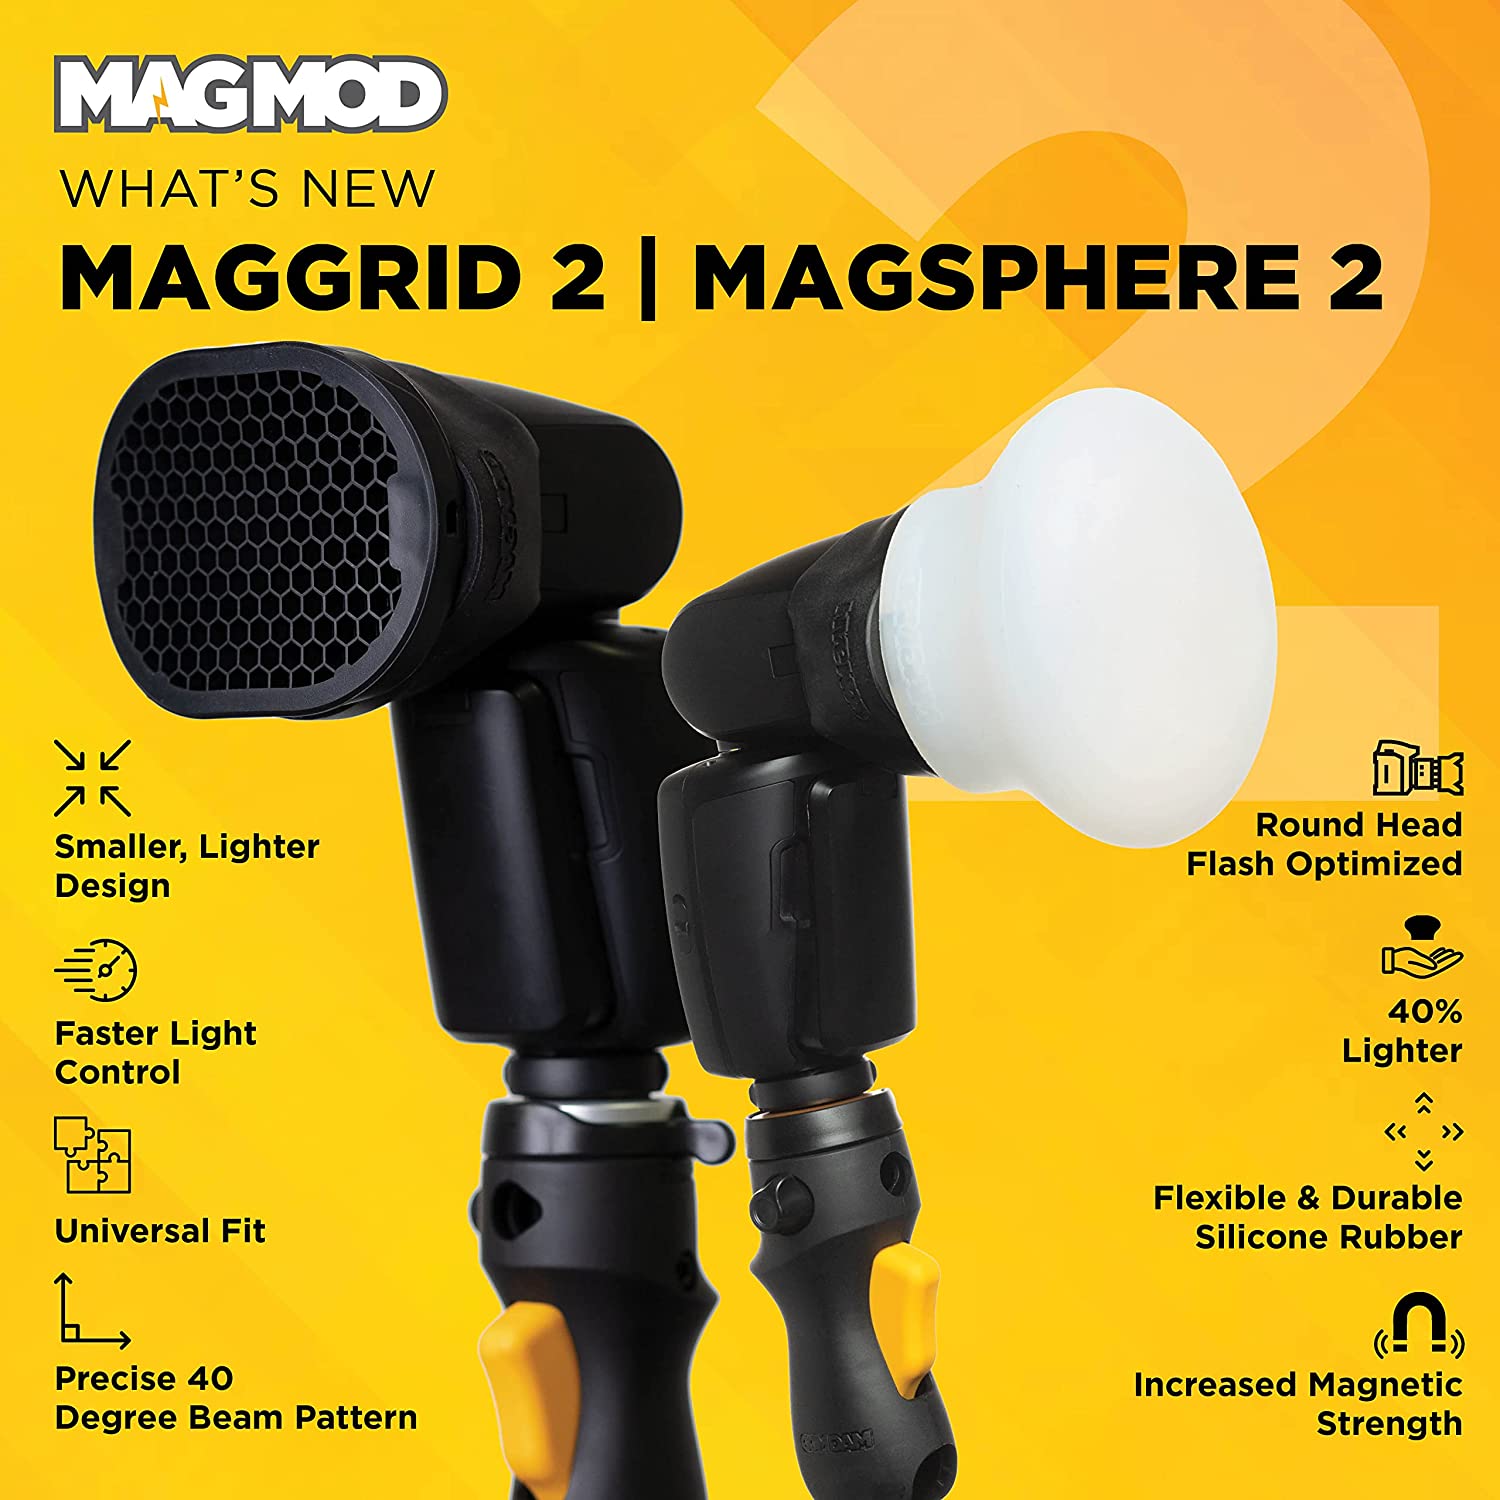 Magmod Professional Flash Kit 2